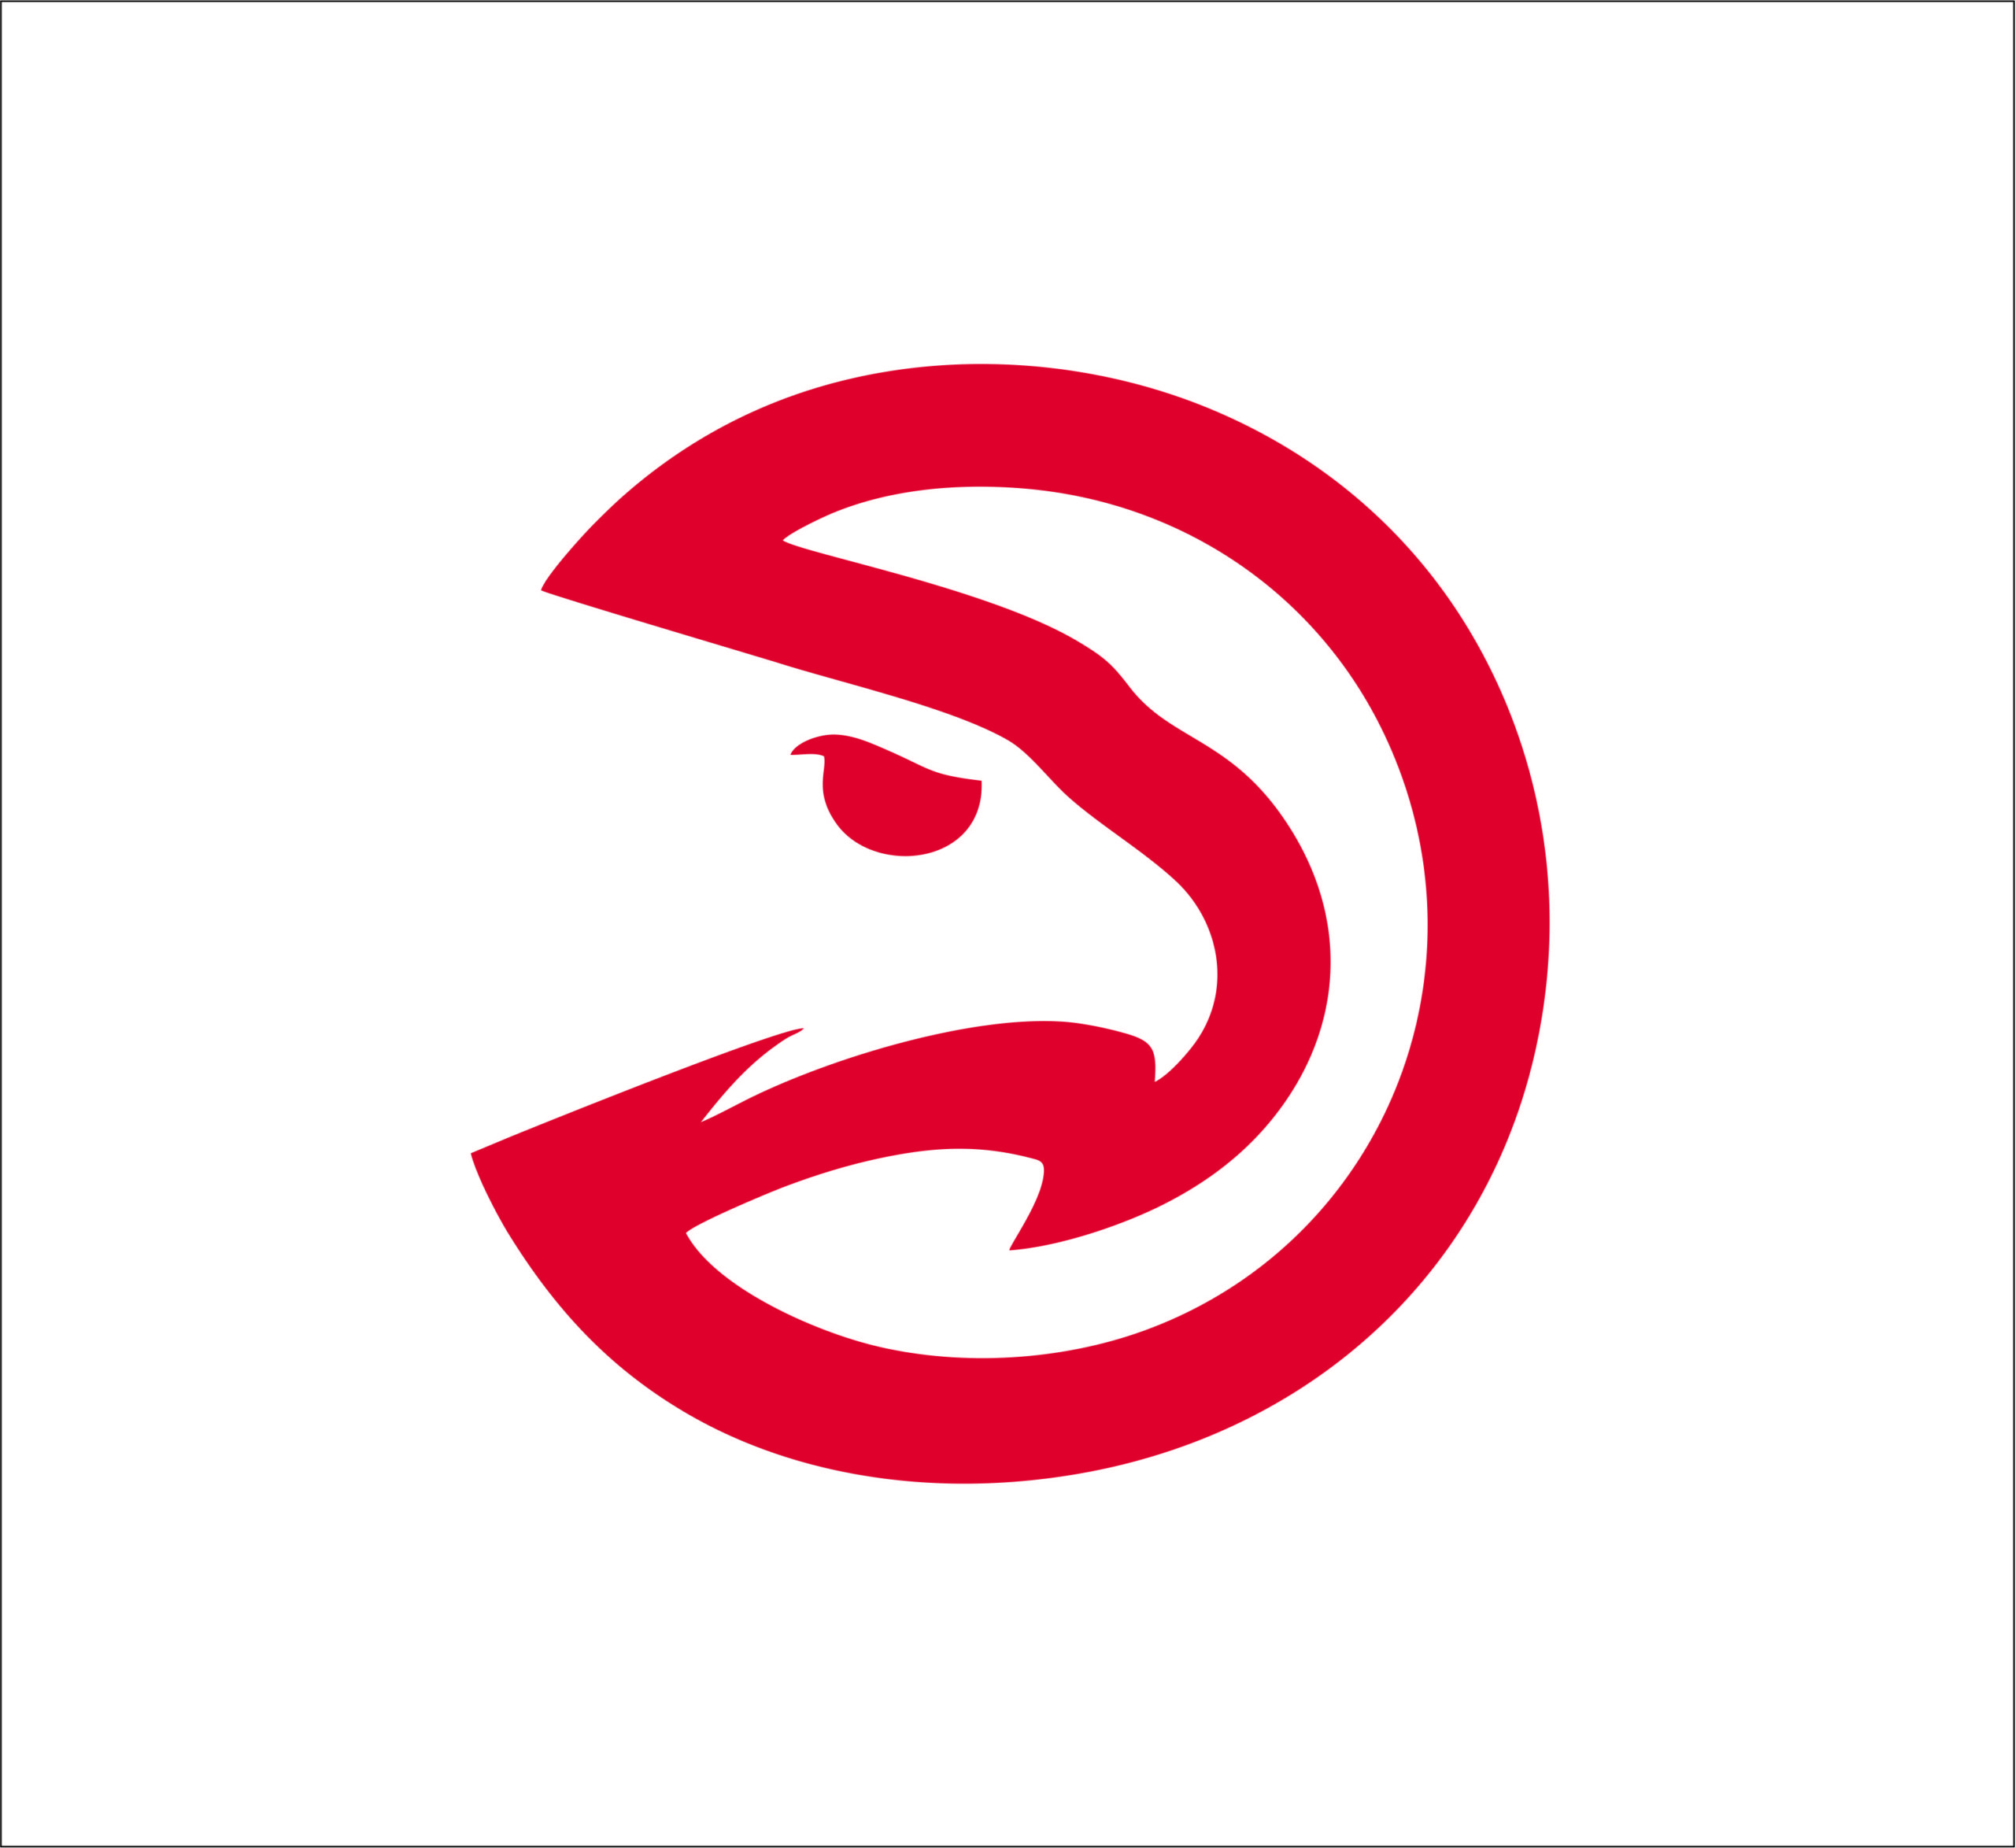 Atlanta Hawks logo SVGprinted